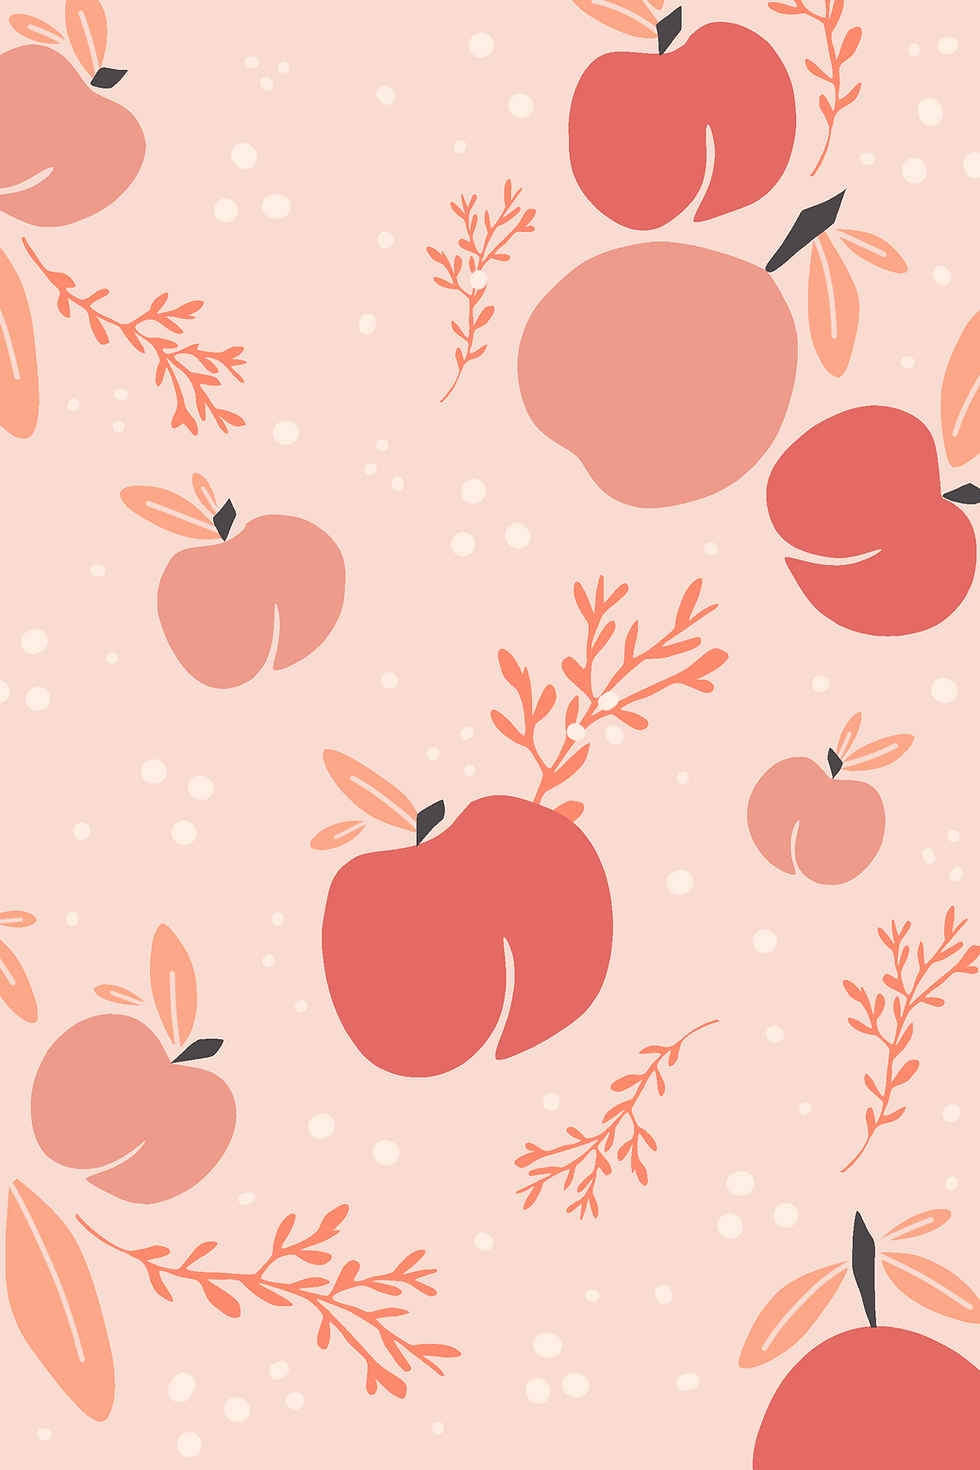 Fruits & Flowers Free Wallpaper & Prints